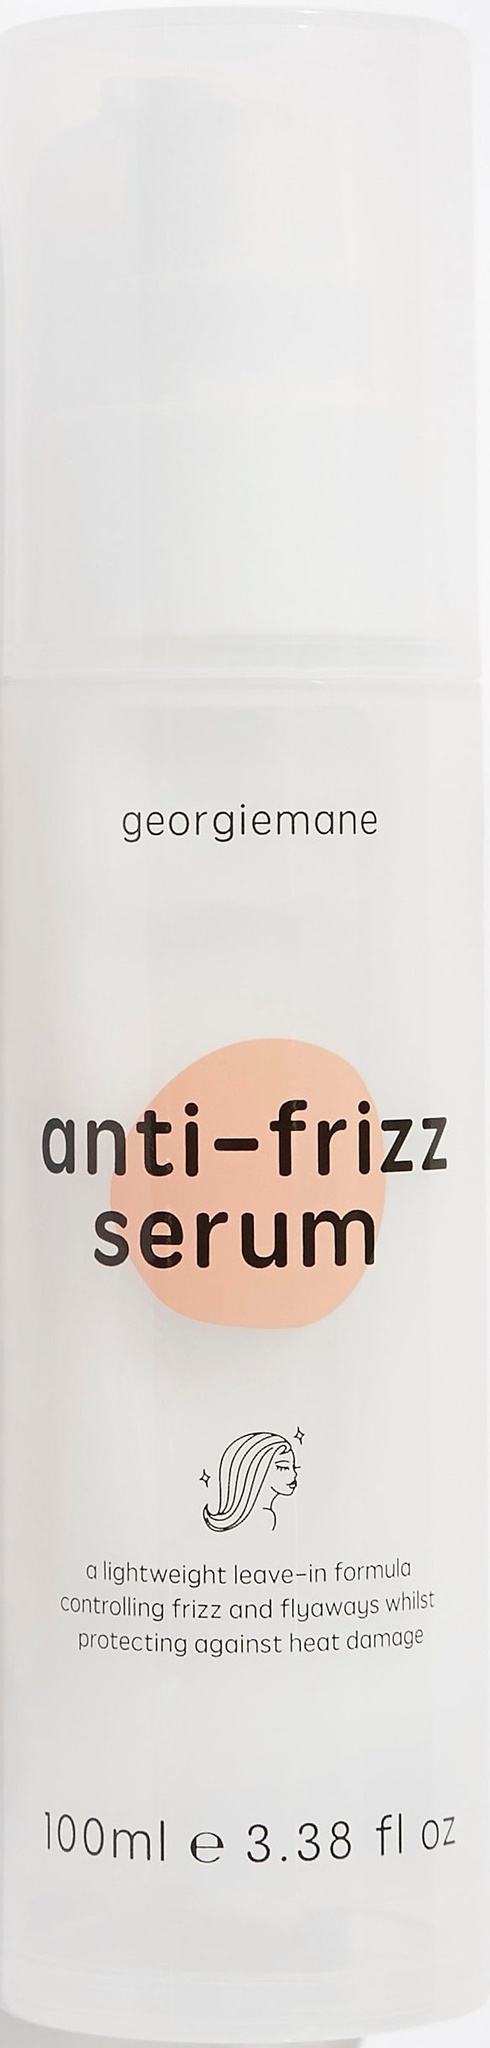 Georgiemane Anti-frizz Serum